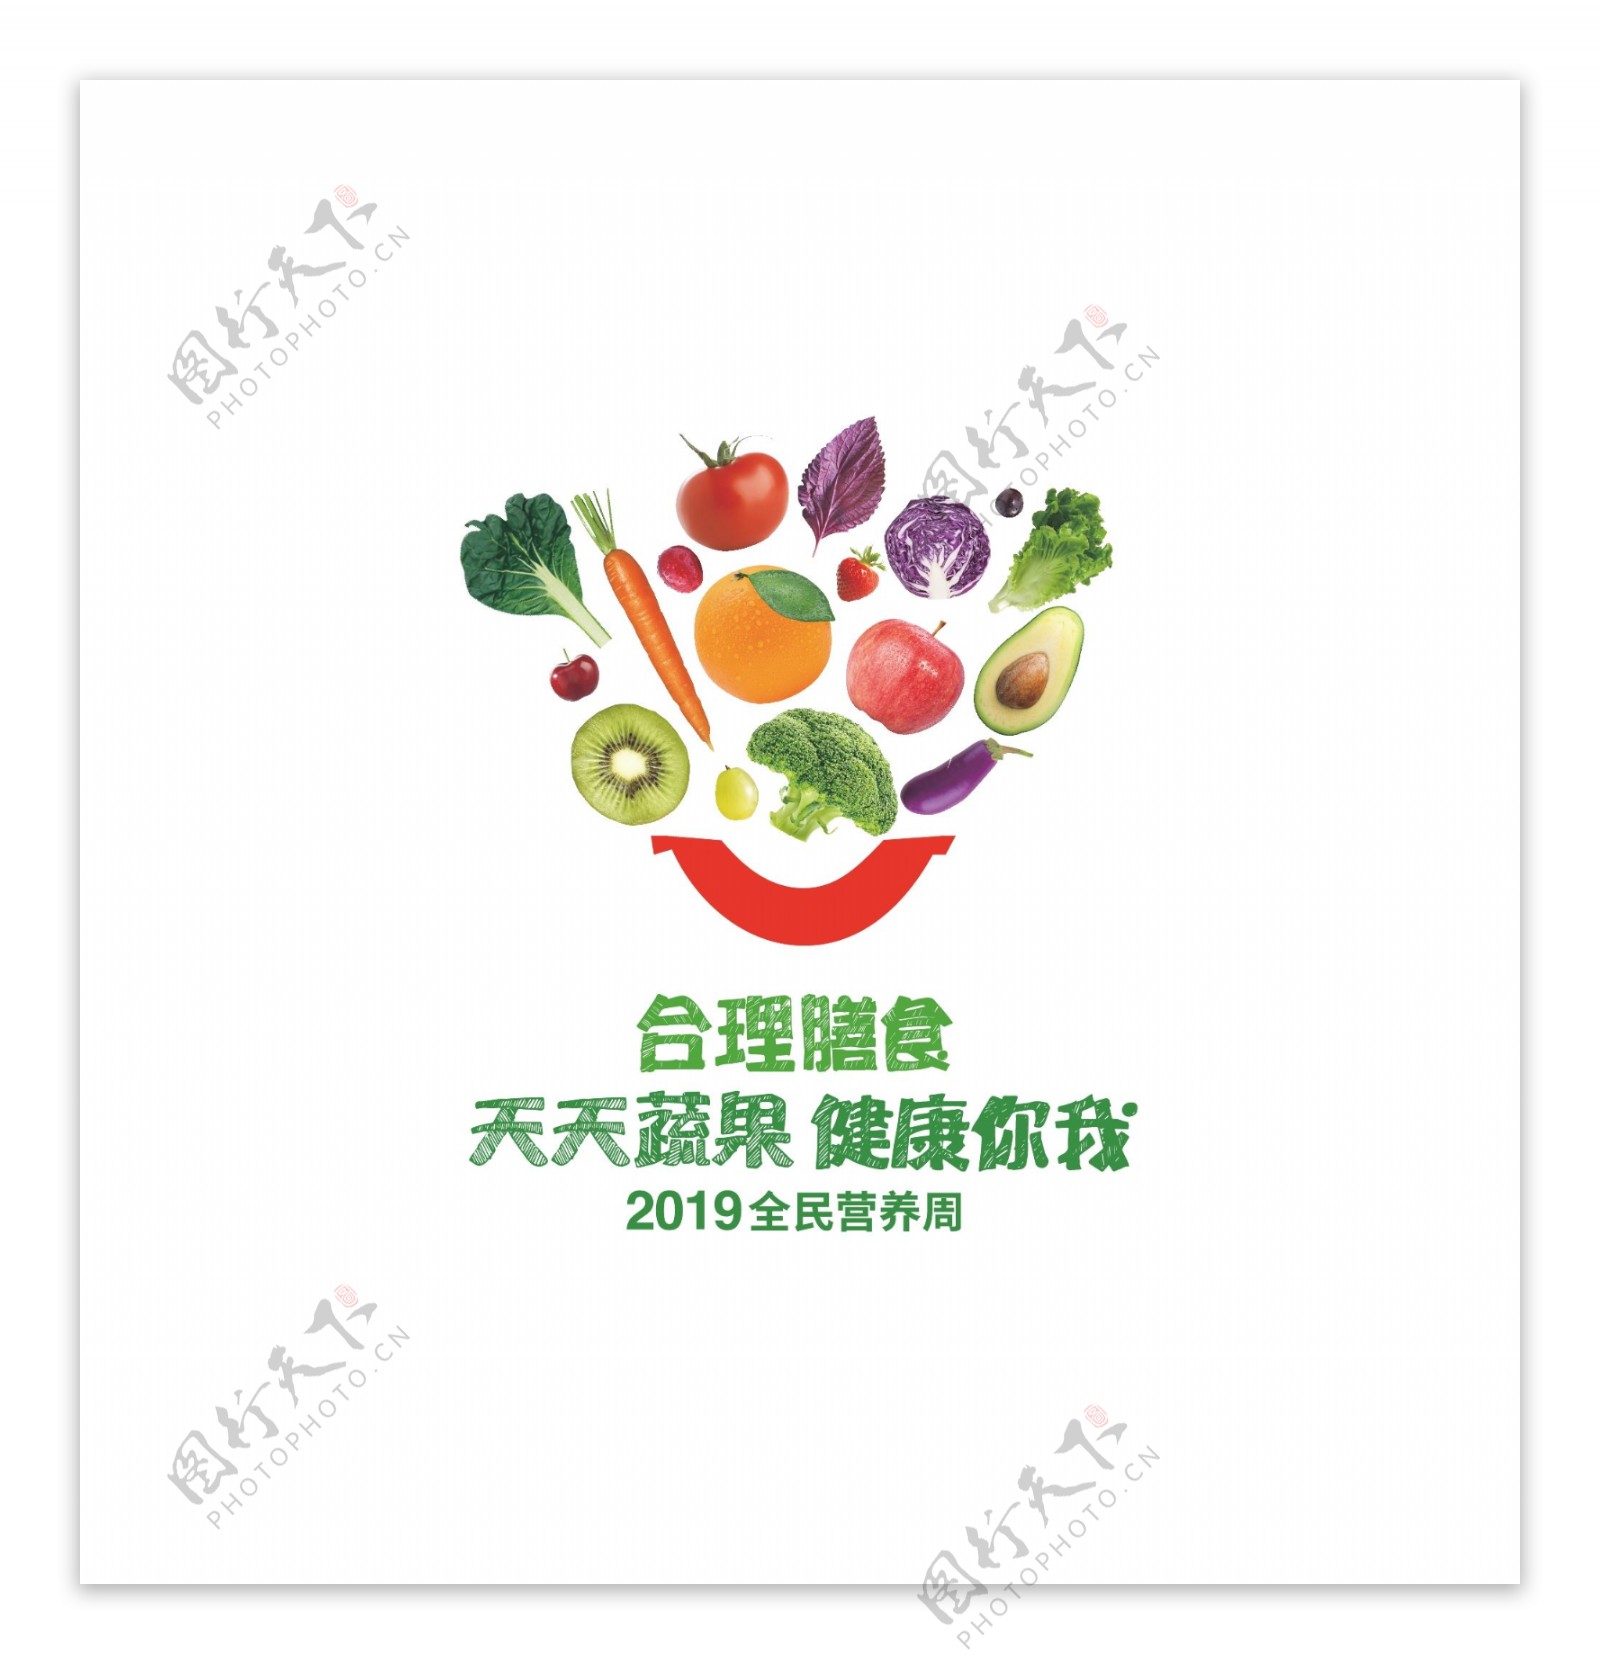 全民营养周logo